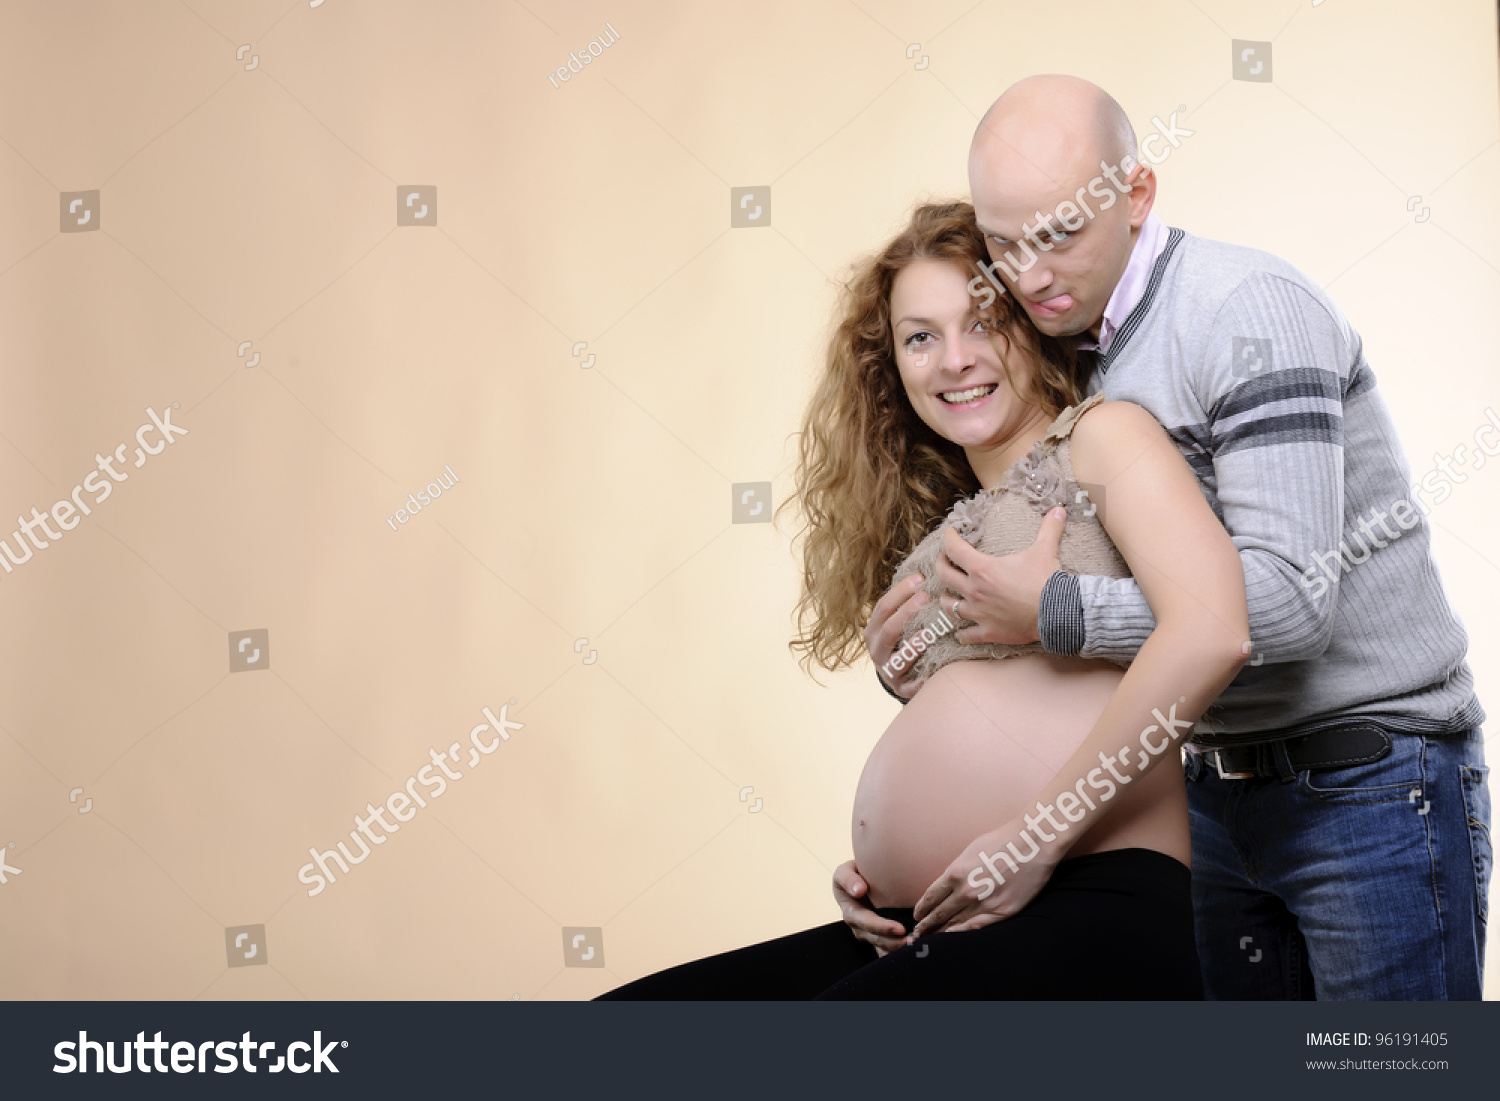 creative pregnancy photography couples